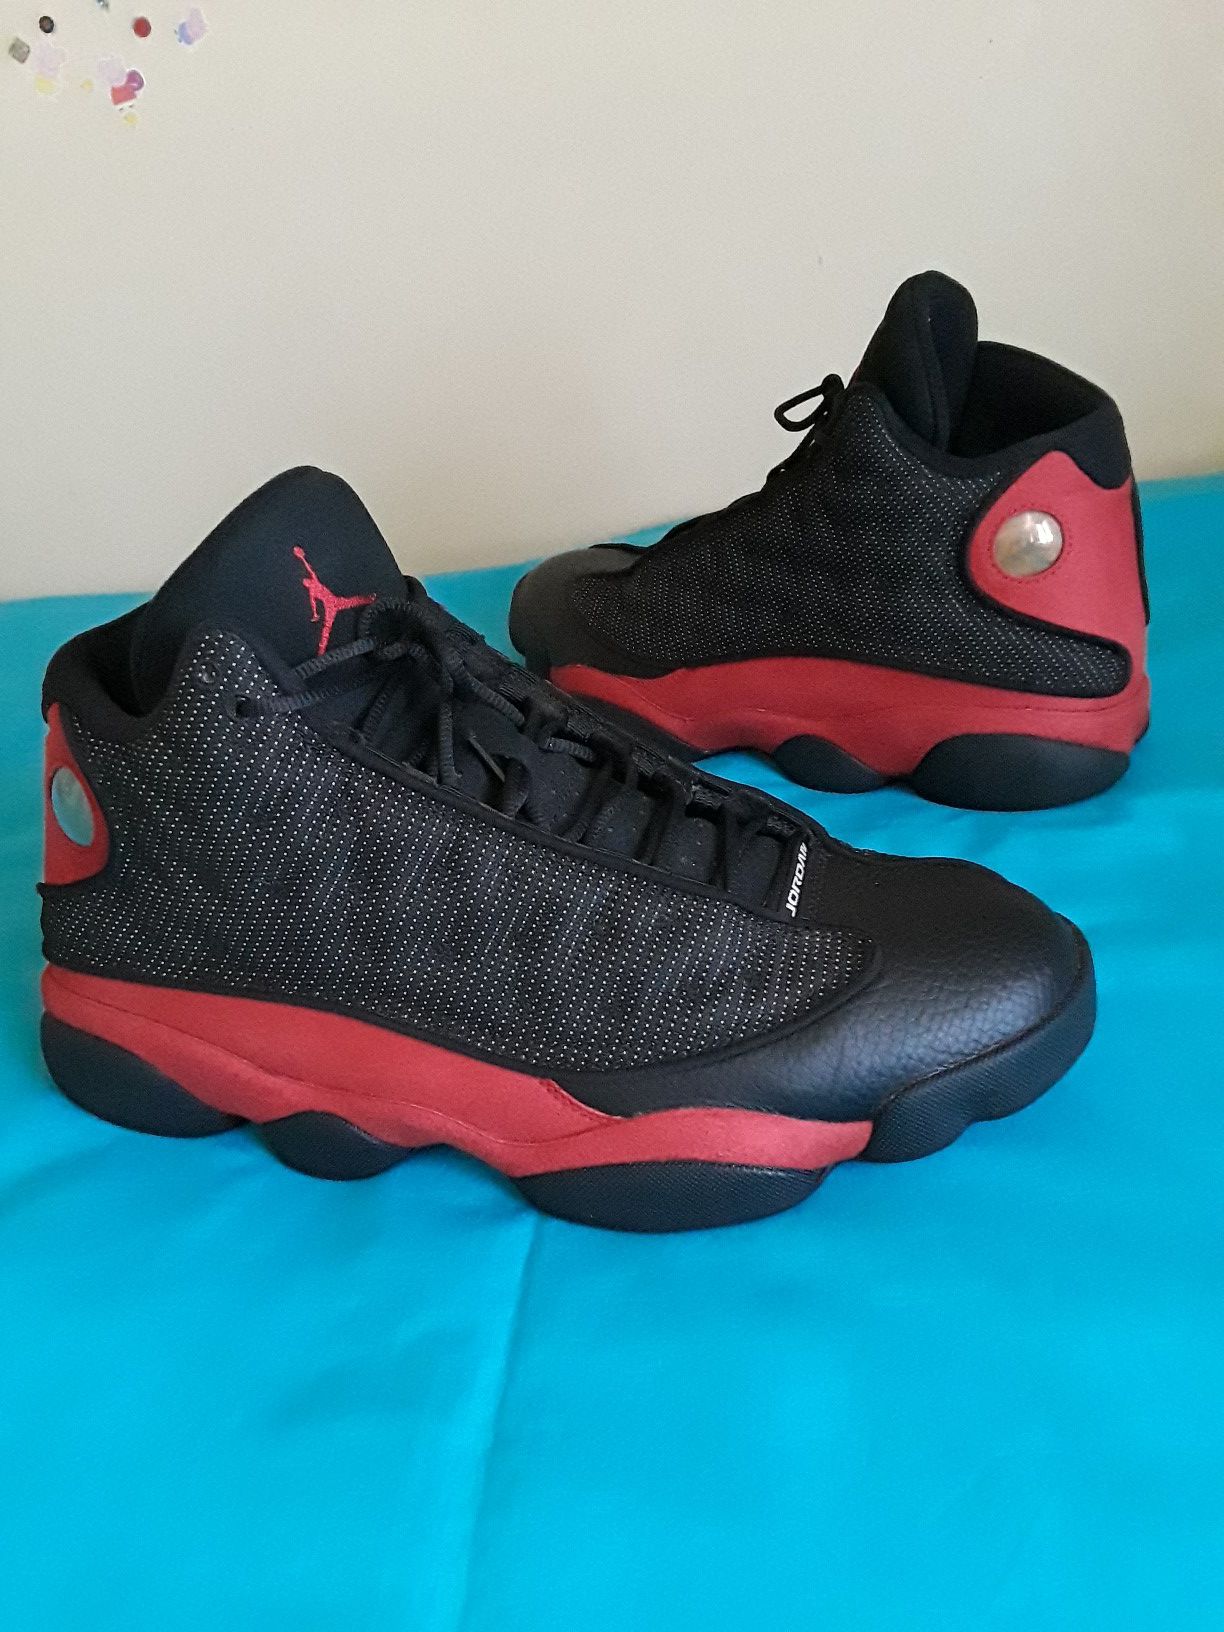 Men's Nike Air Jordan 13 Retro Bred Red Black Size 12